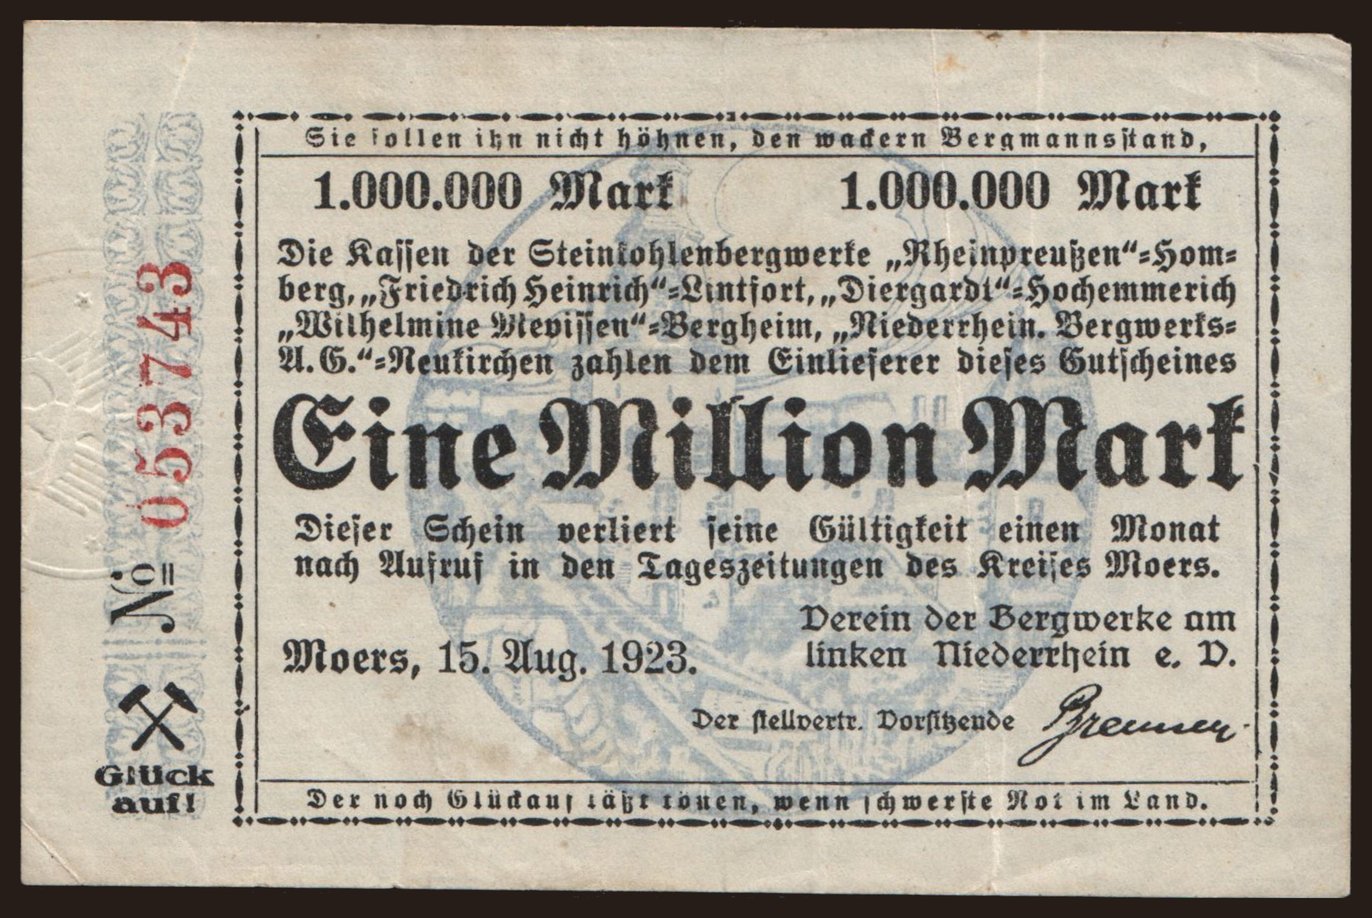 Moers/ Verein der Bergwerke am linken Niederrhein e.V., 1.000.000 Mark, 1923